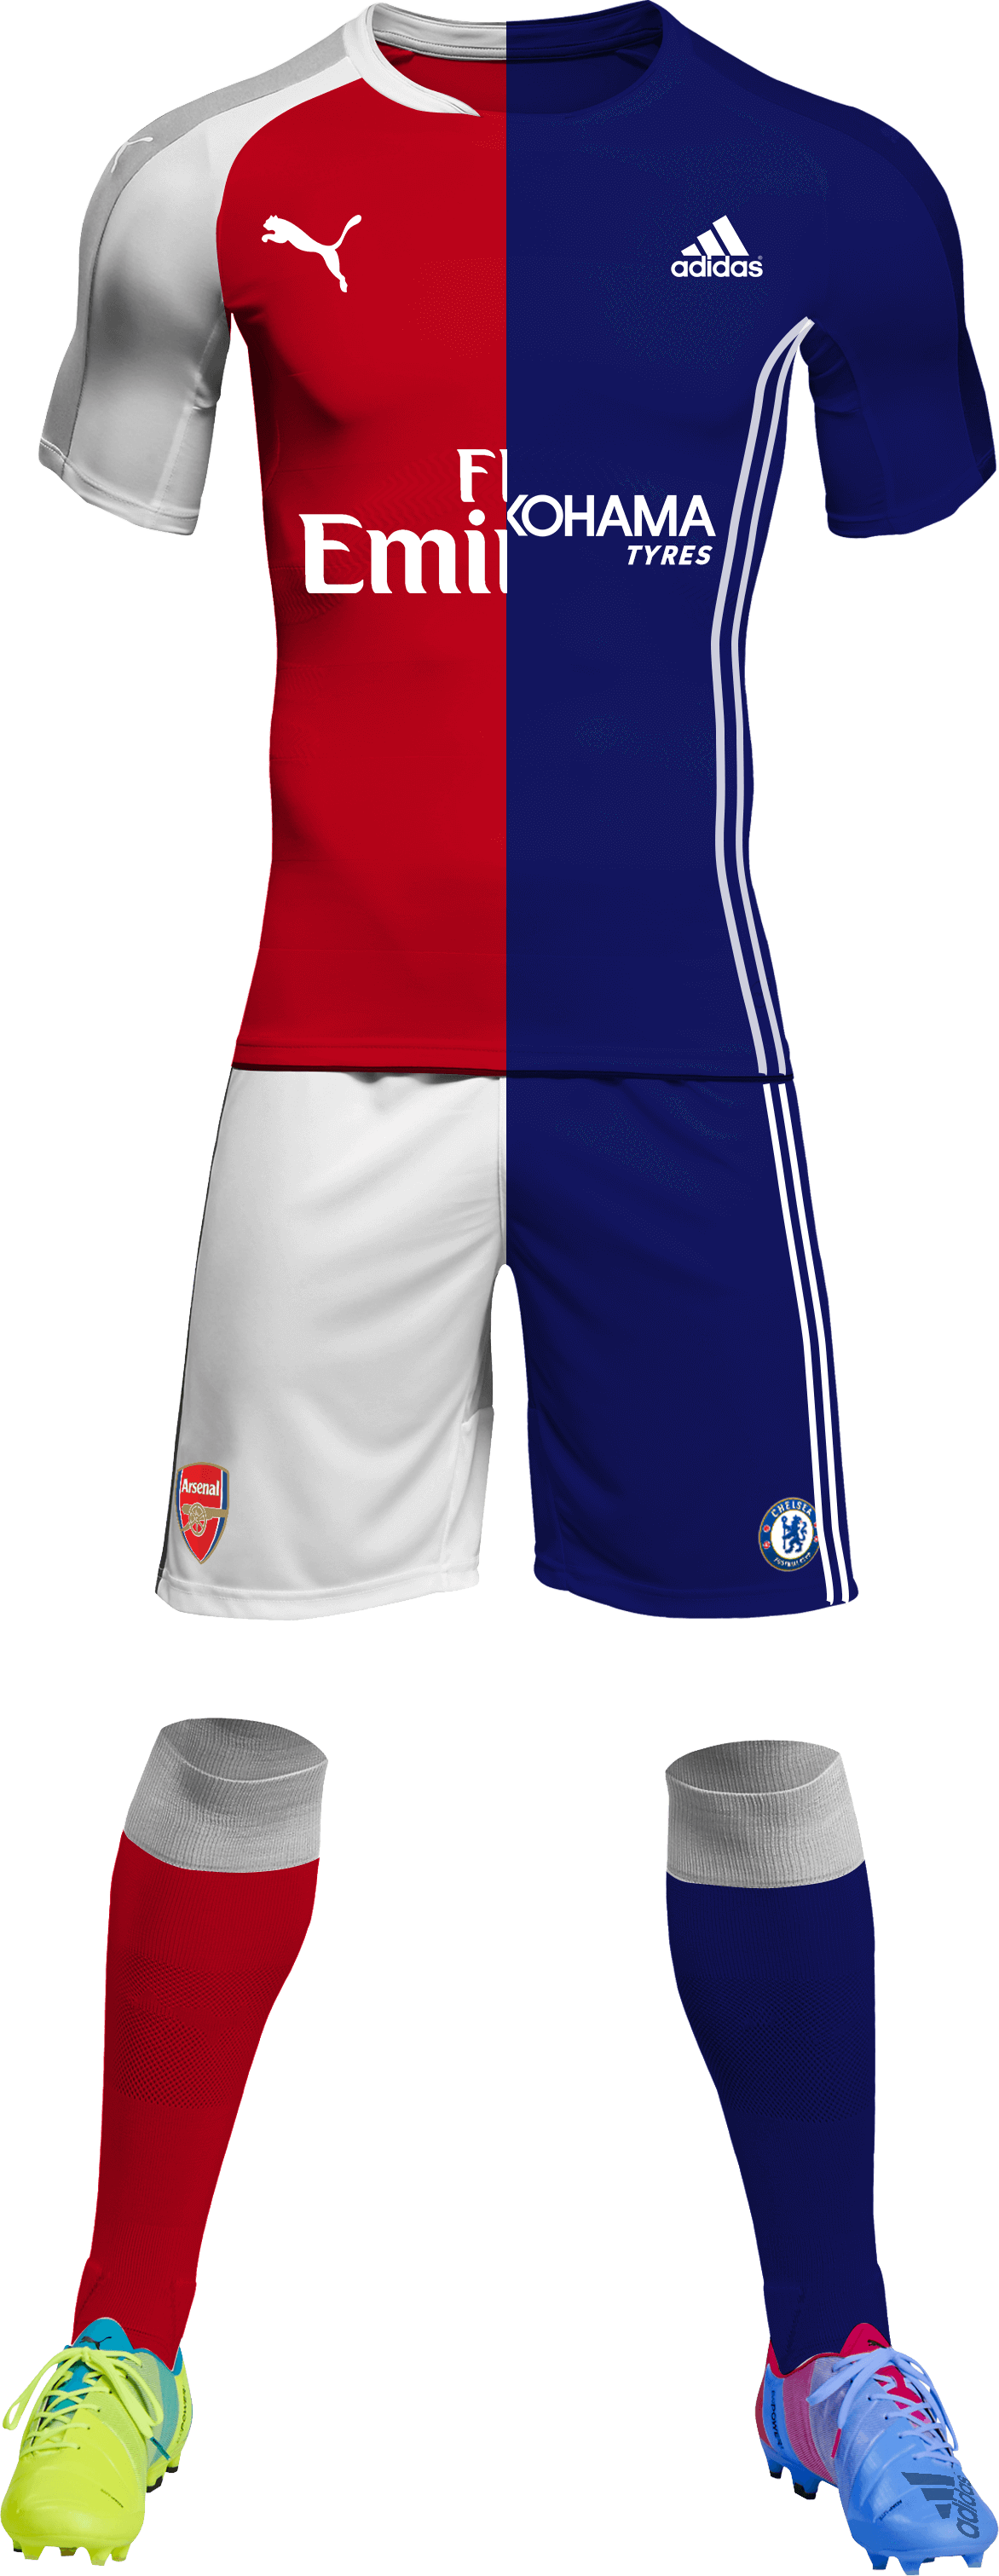 Fly Emirates Arsenal Chelsea Football Kit Hybrid